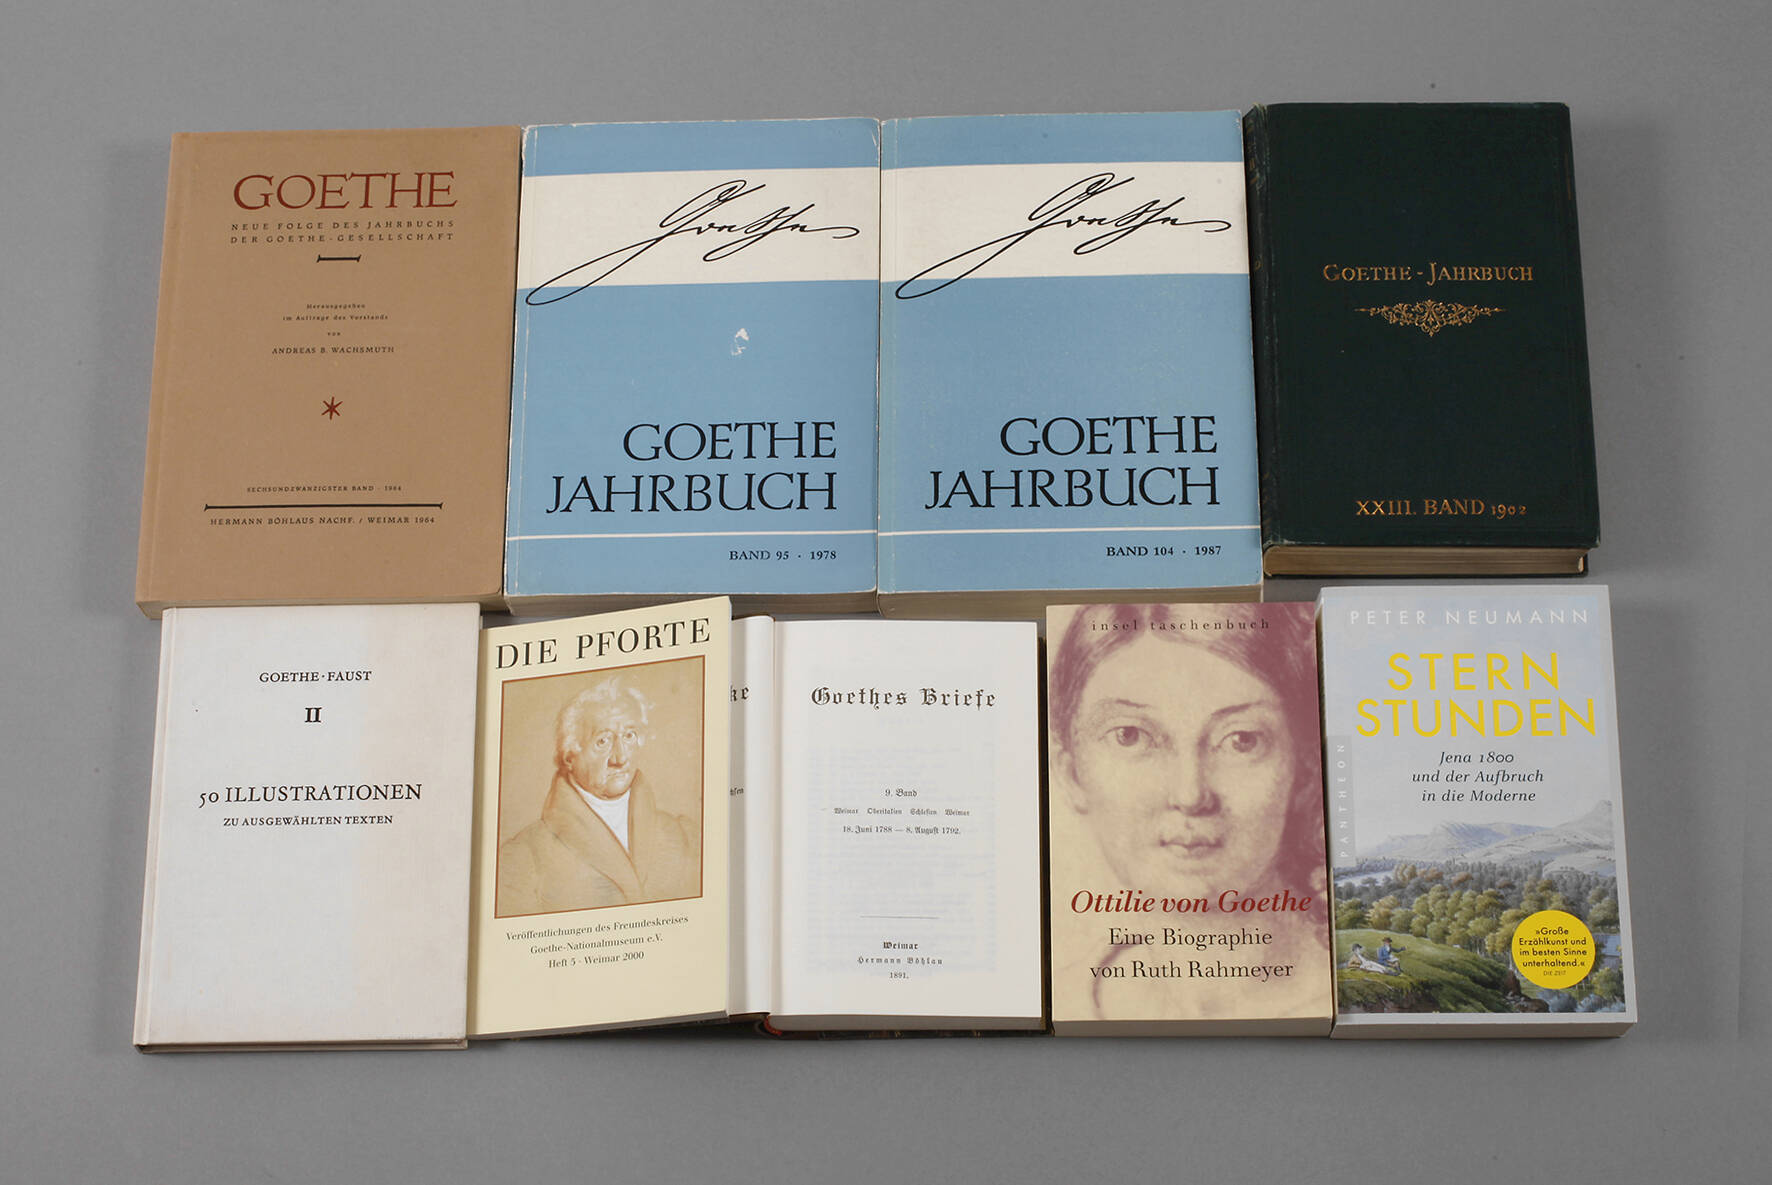 Konvolut Goethe-Literatur